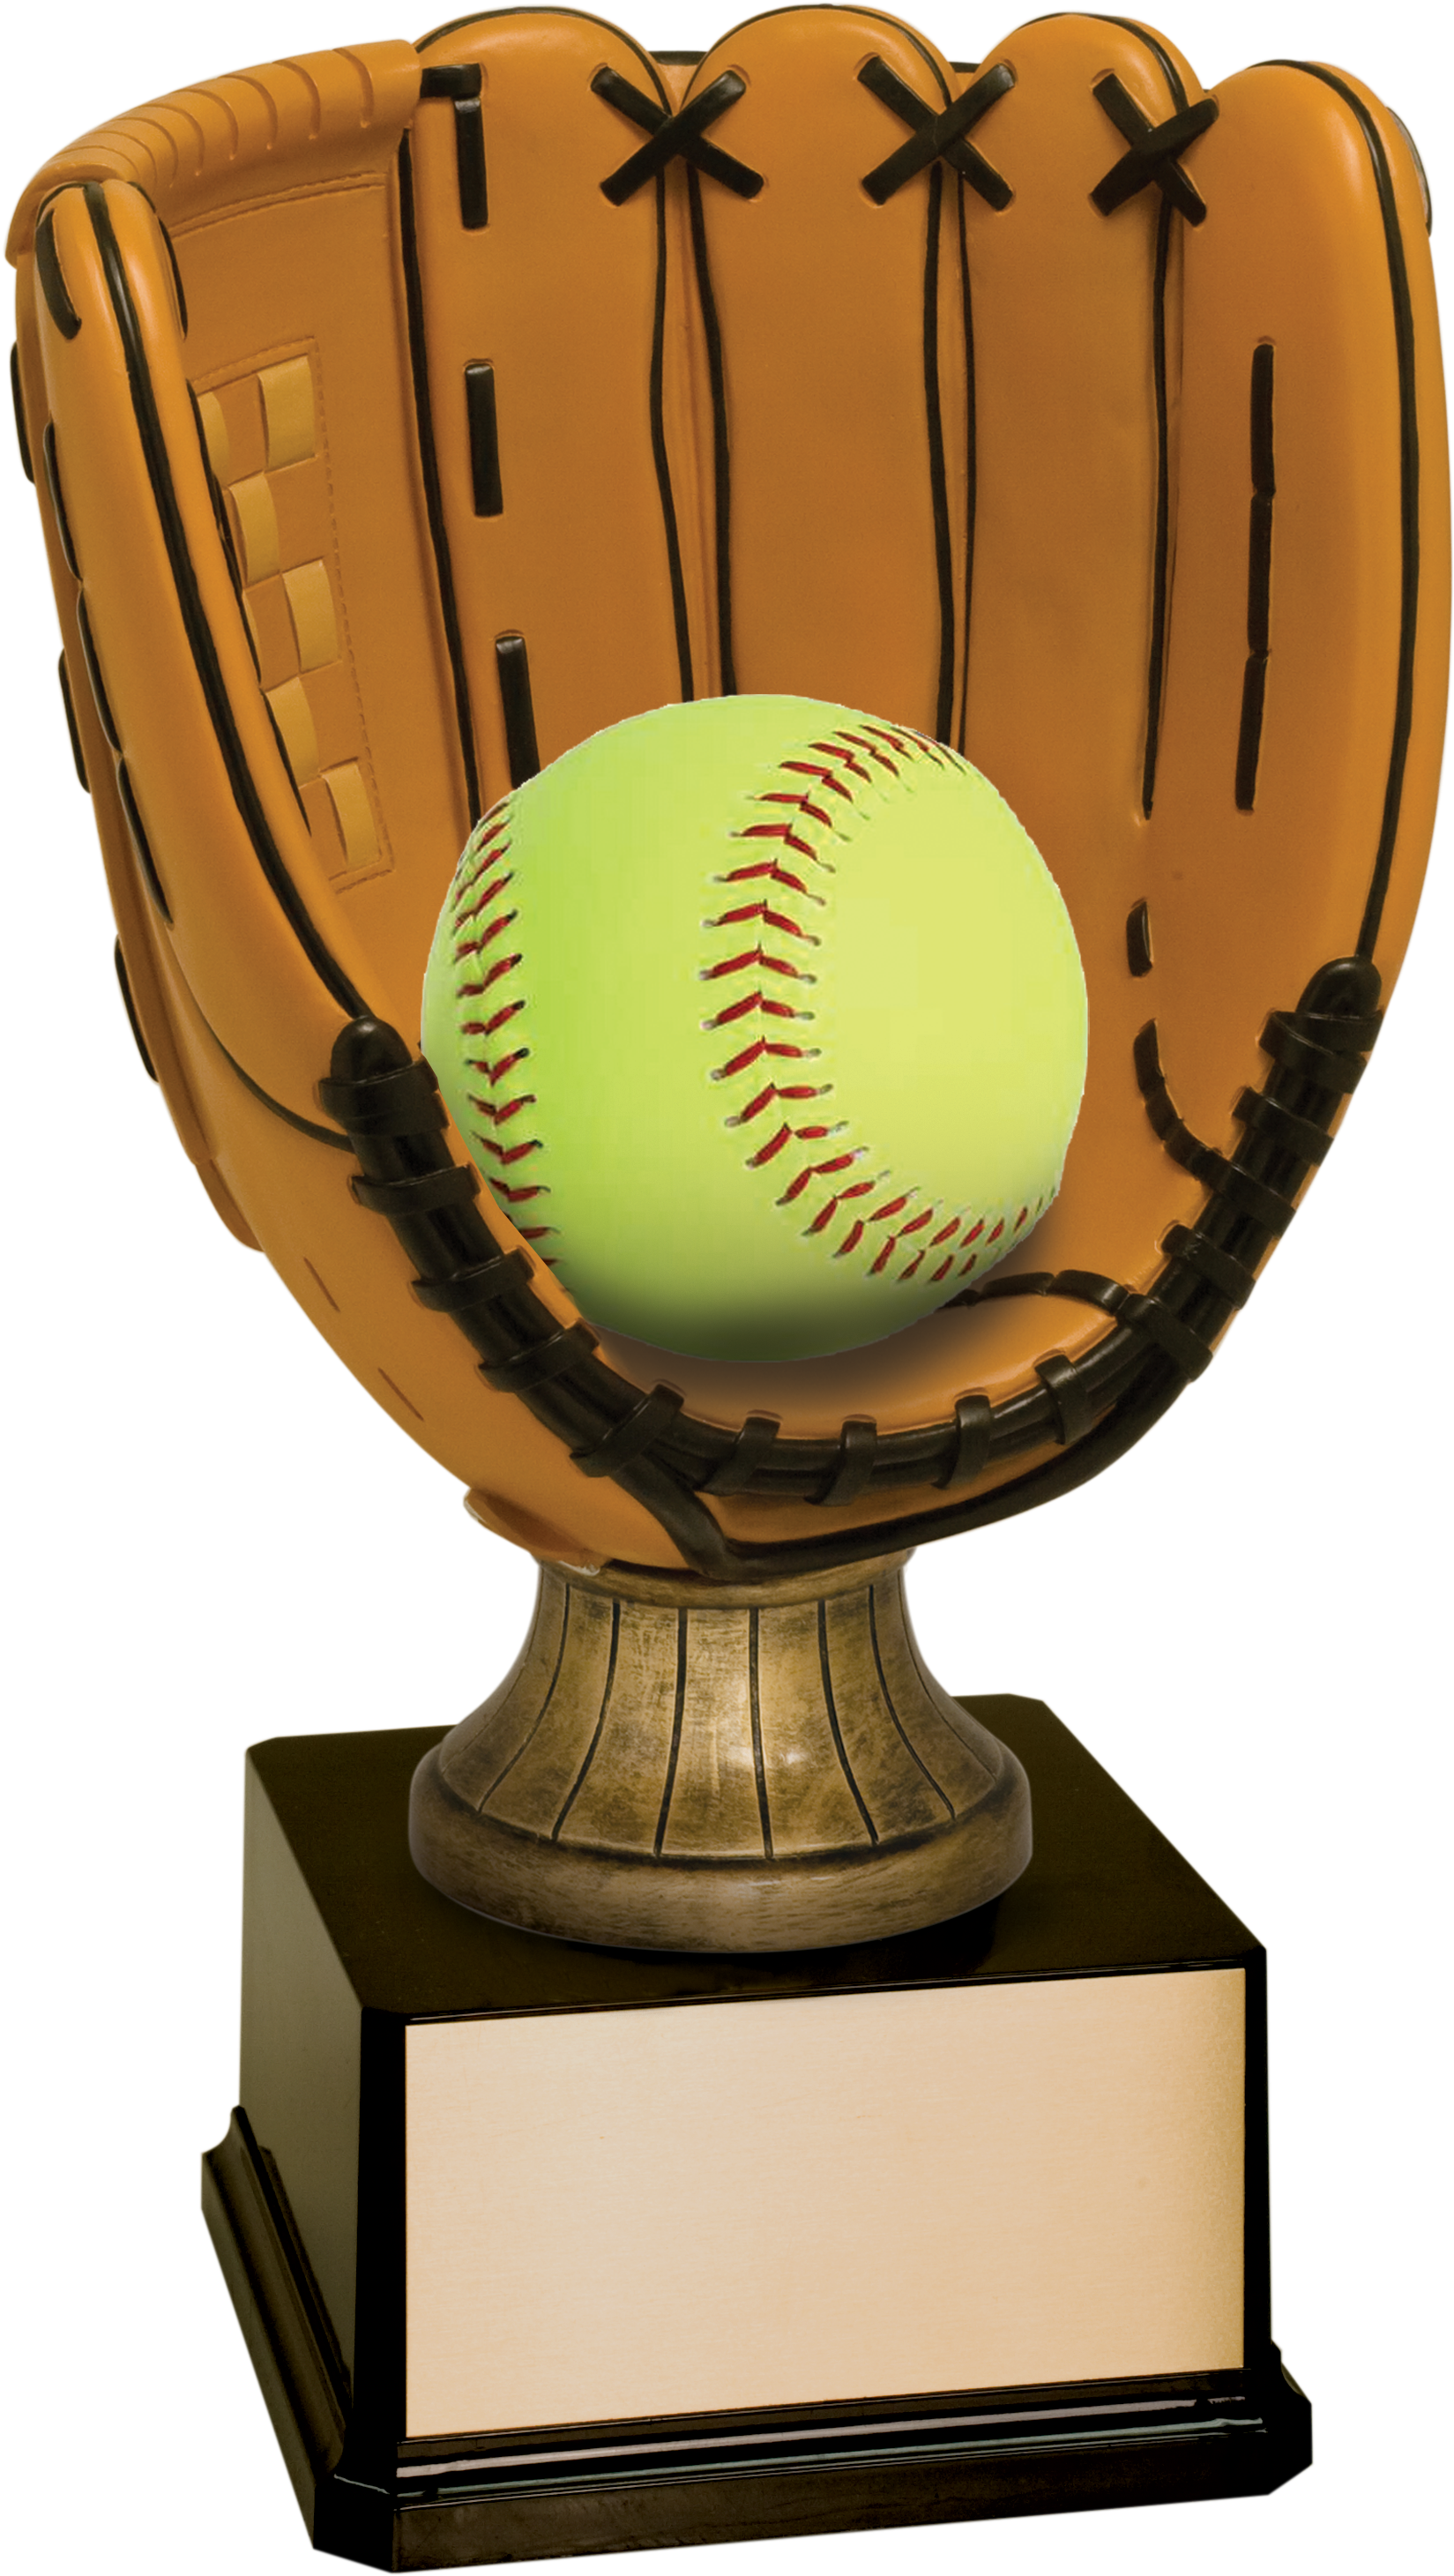 April 23, 2014 - Softball Glove Ball Holder Trophy (1740x3180)